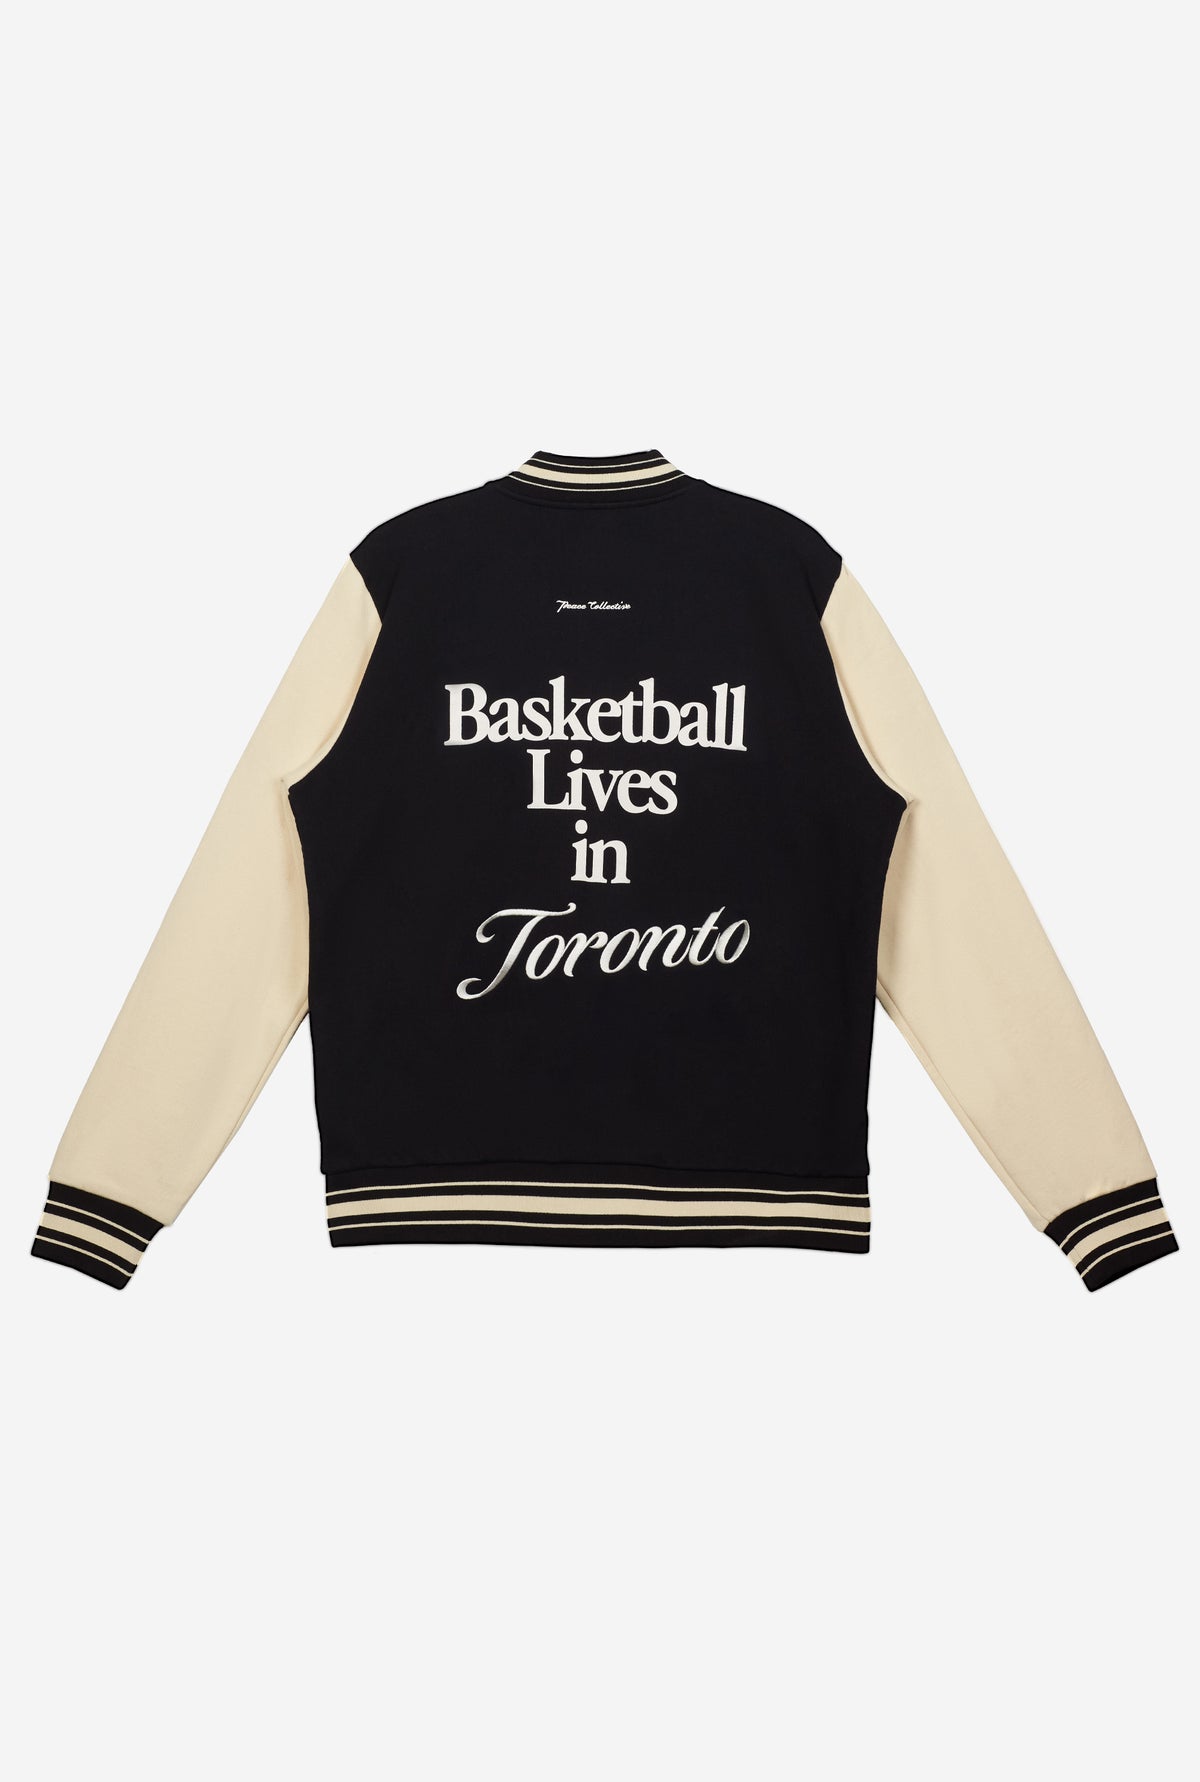 Basketball Lives in Toronto Letterman Jacket - Black/Cream